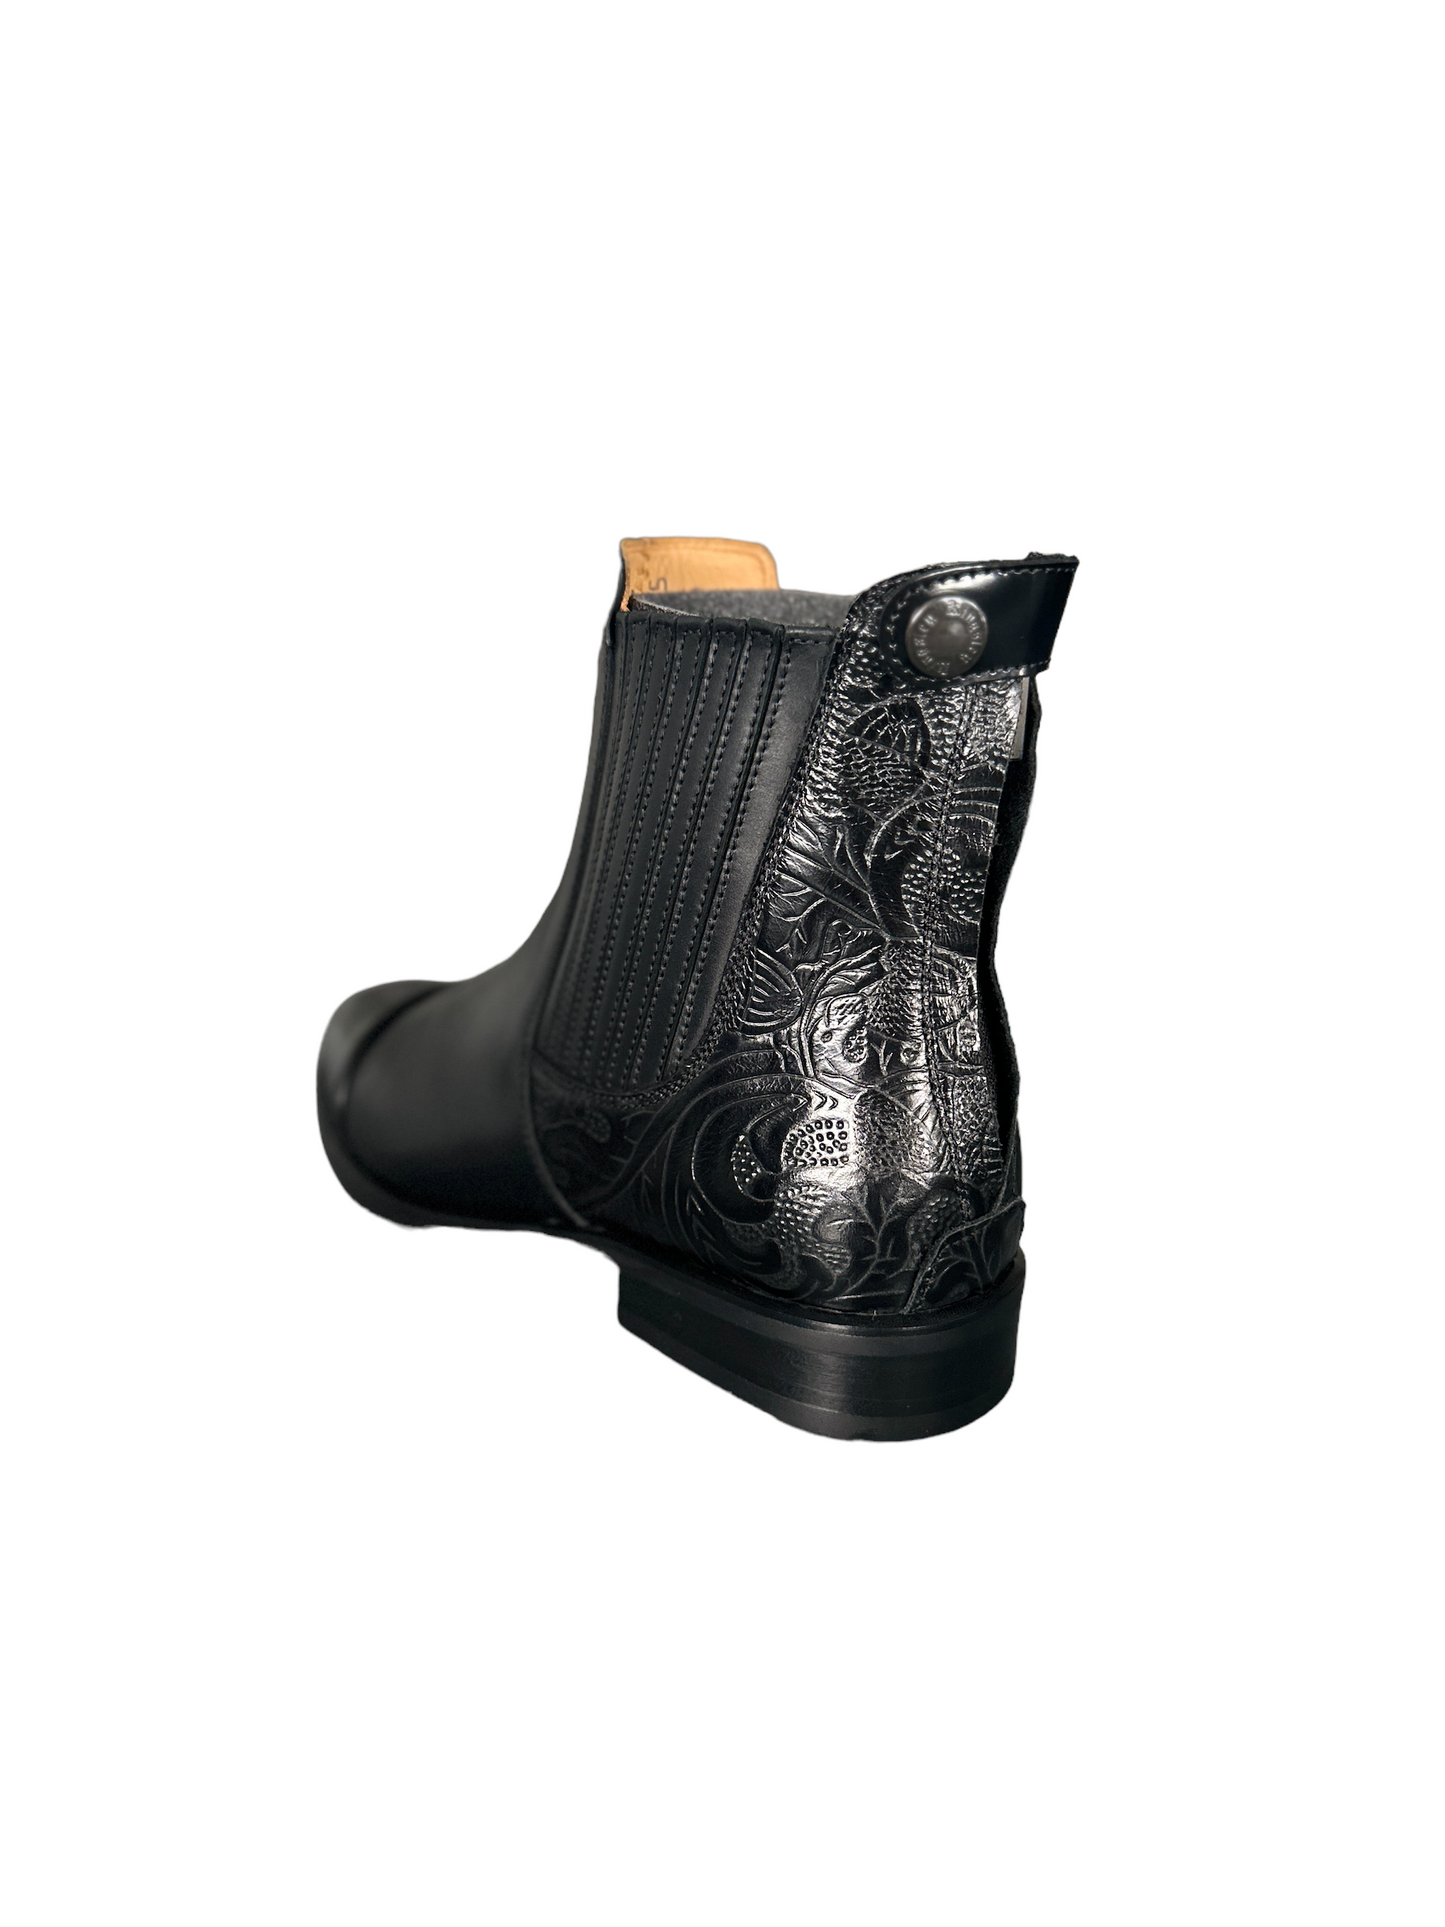 Kingsley Berlin Short Boot - Black Tooled (39.5)